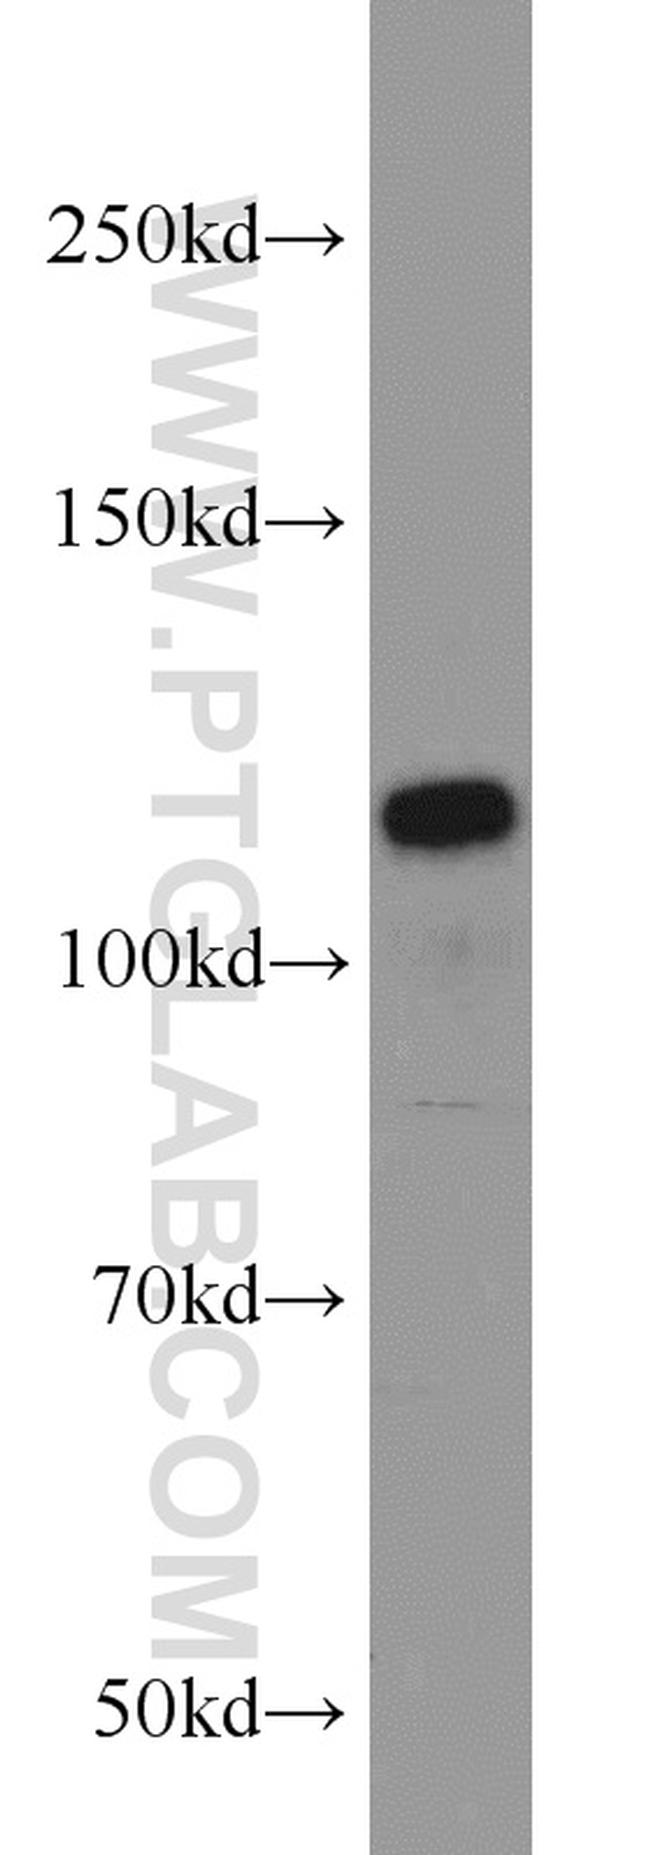 PPP1R15B Antibody in Western Blot (WB)